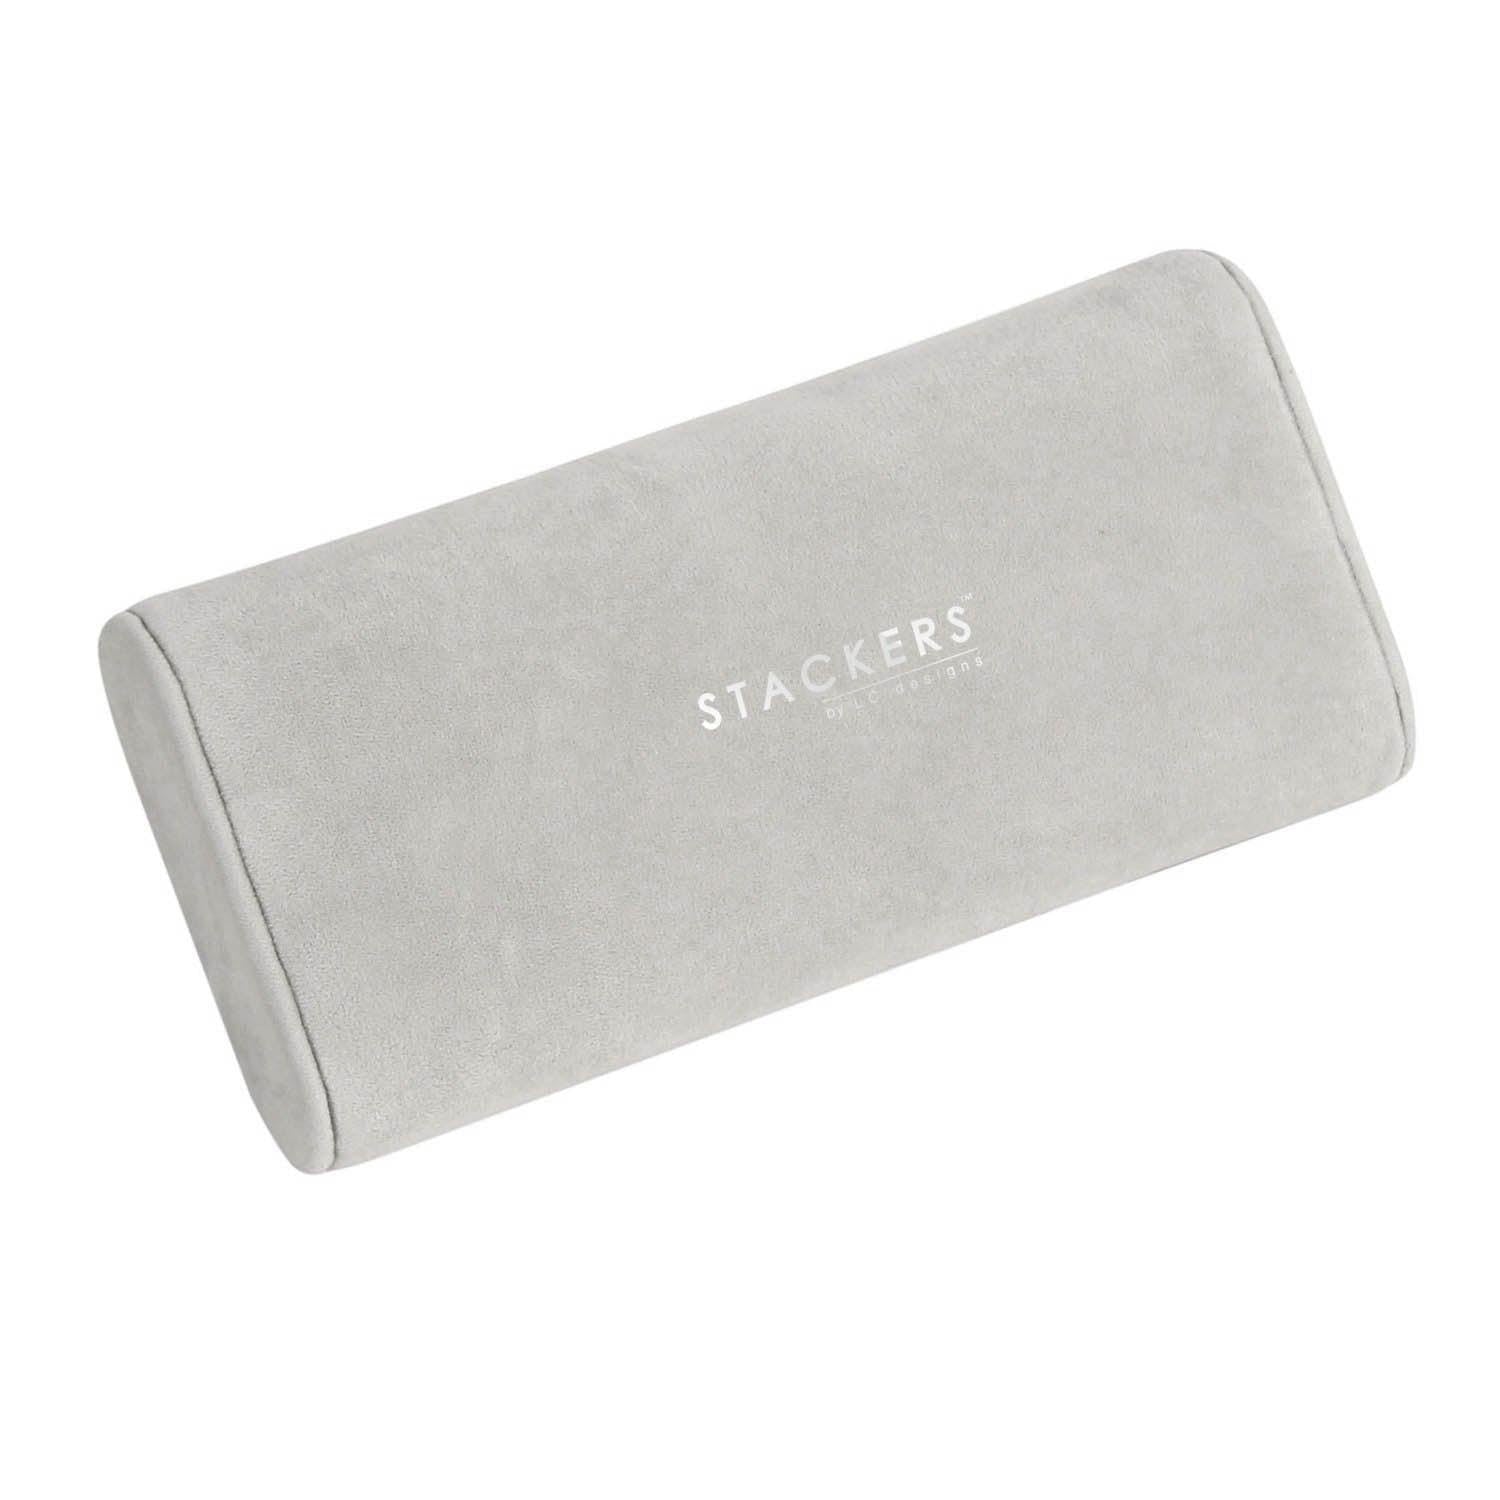 Stackers Accessories Watch - Bracelet Pillow in Grey